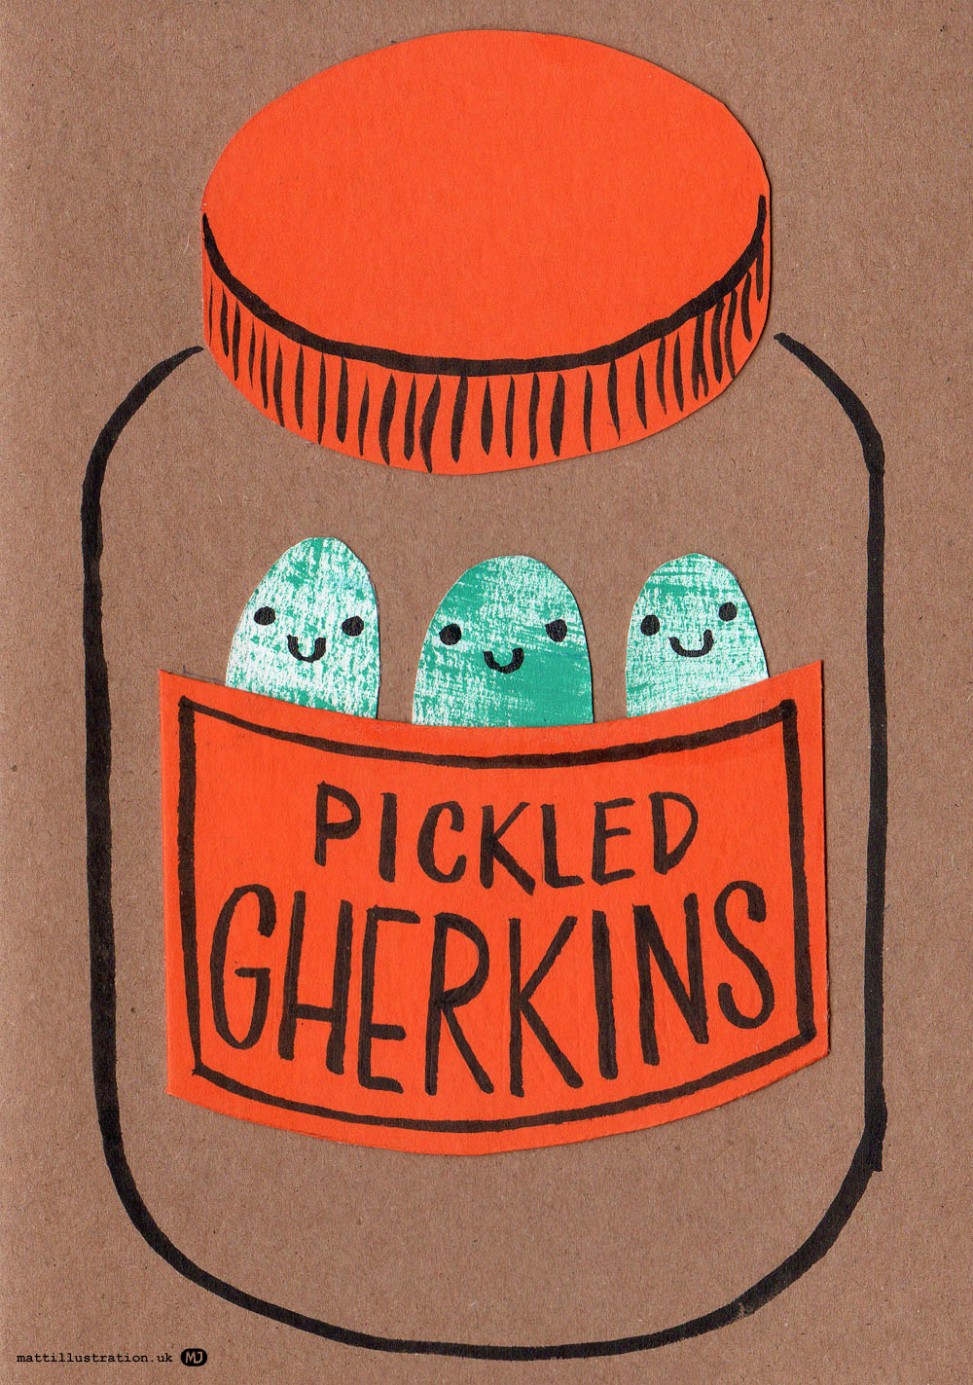 pickled gherkins illustration by Matt Johnson